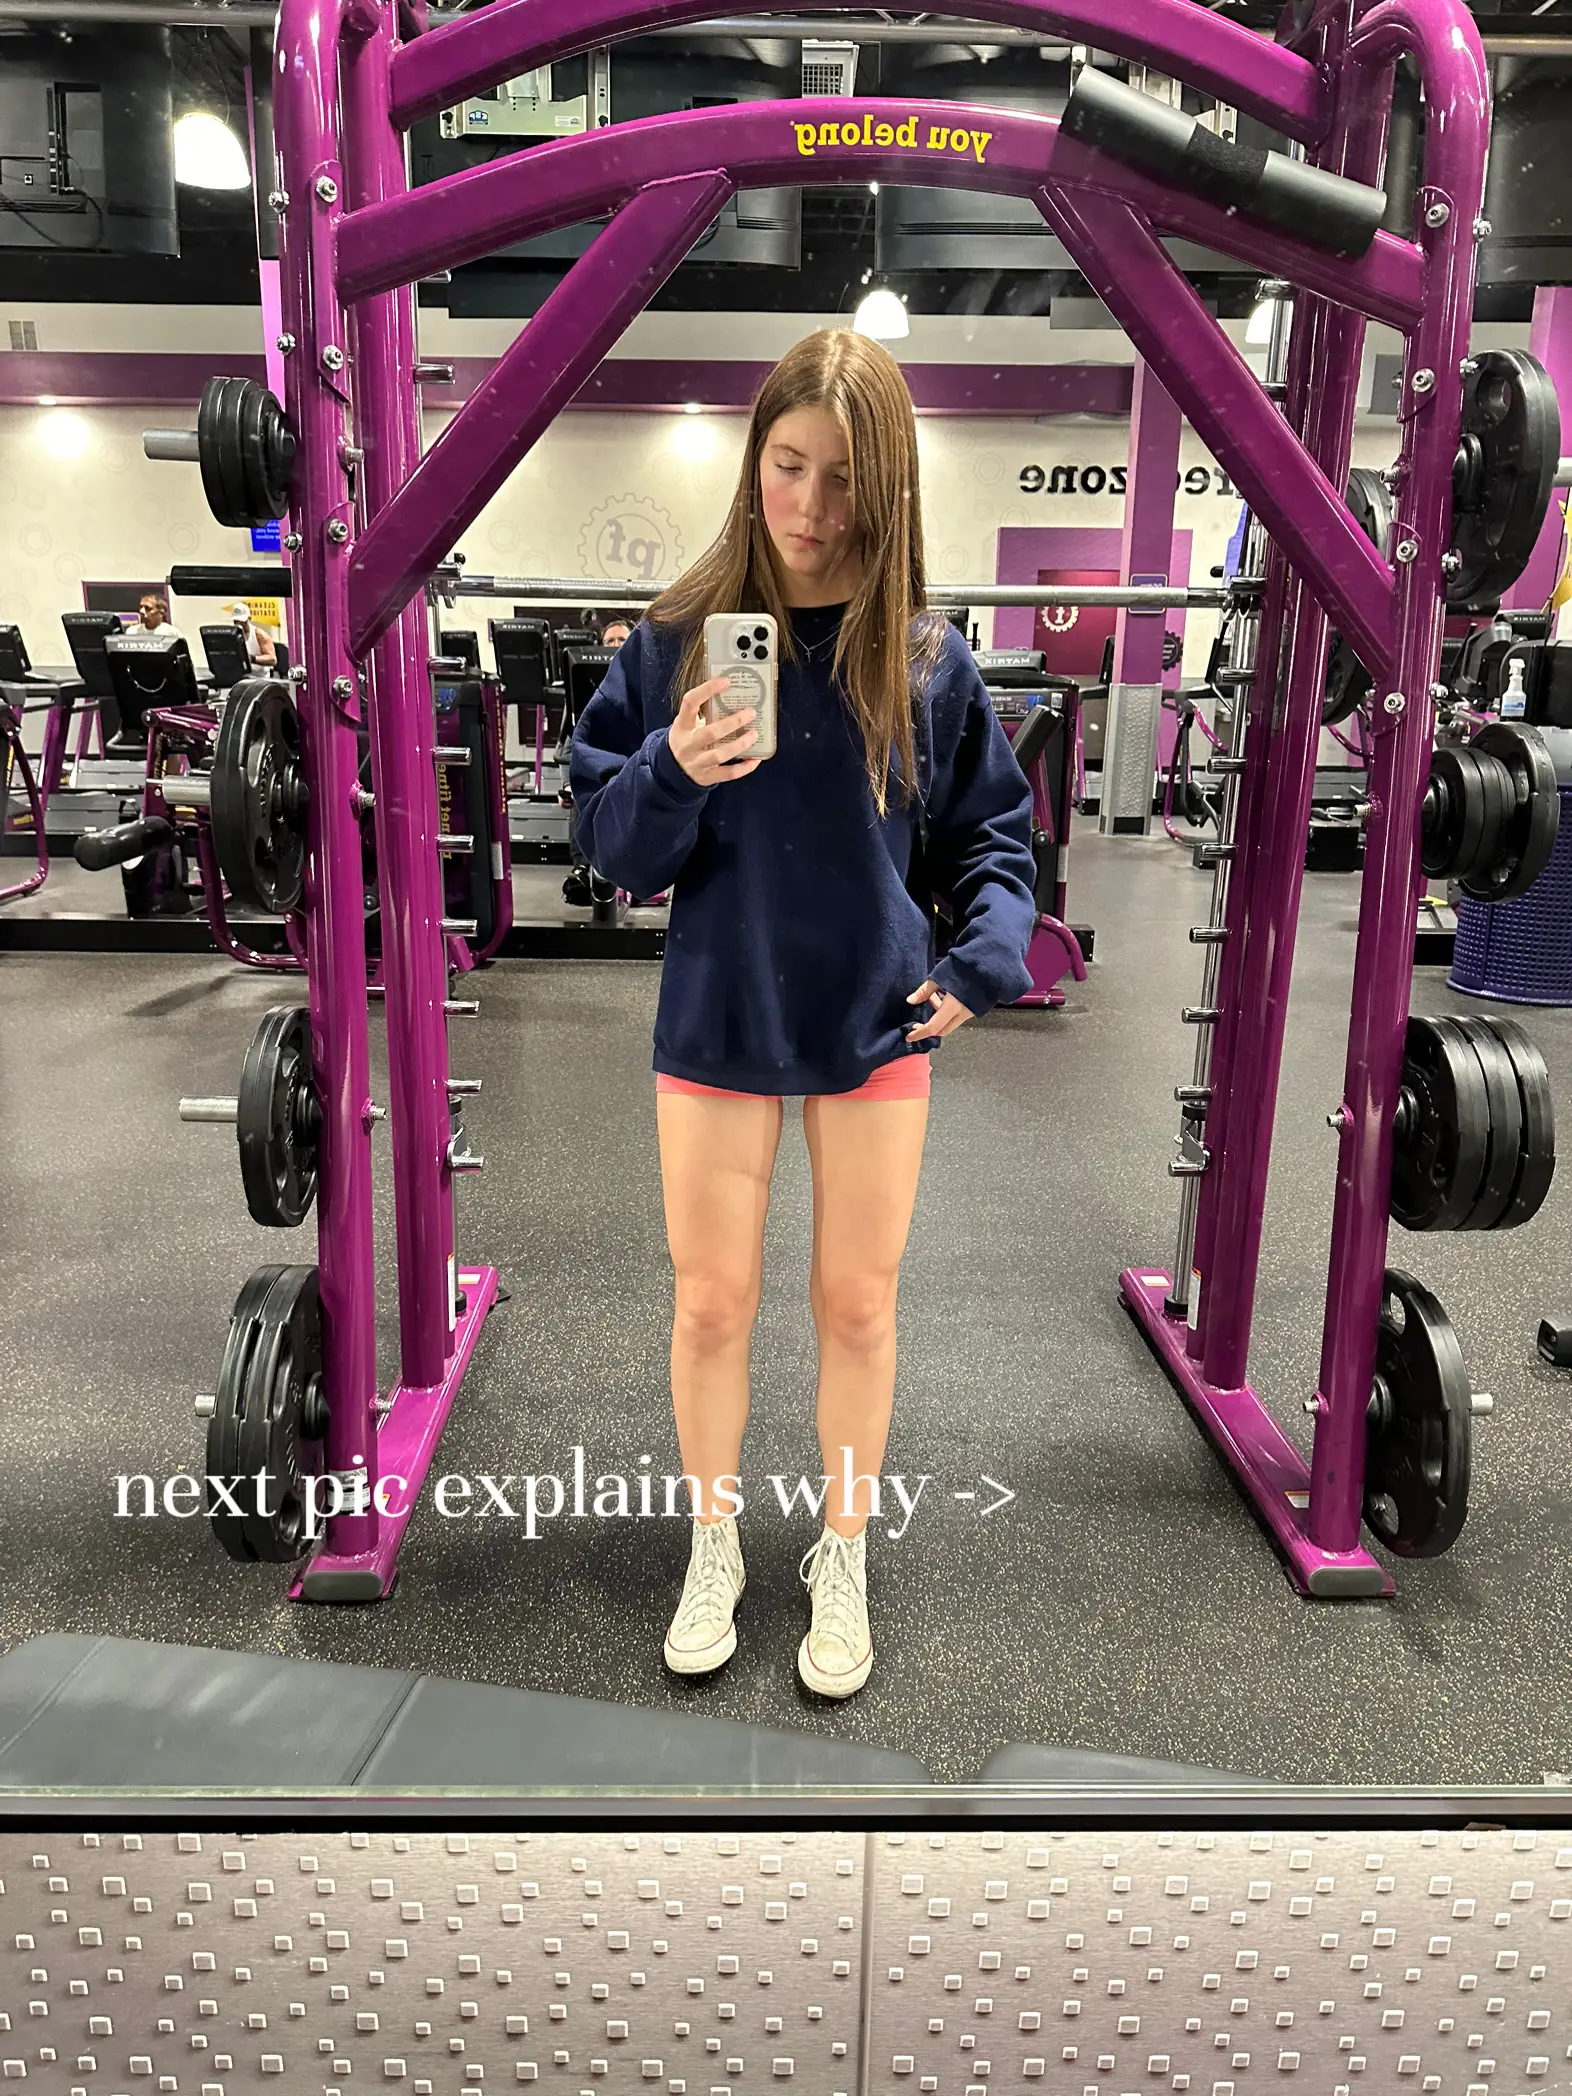 Zentoa pink scrunch bottom gym shorts, Women's Fashion, Activewear